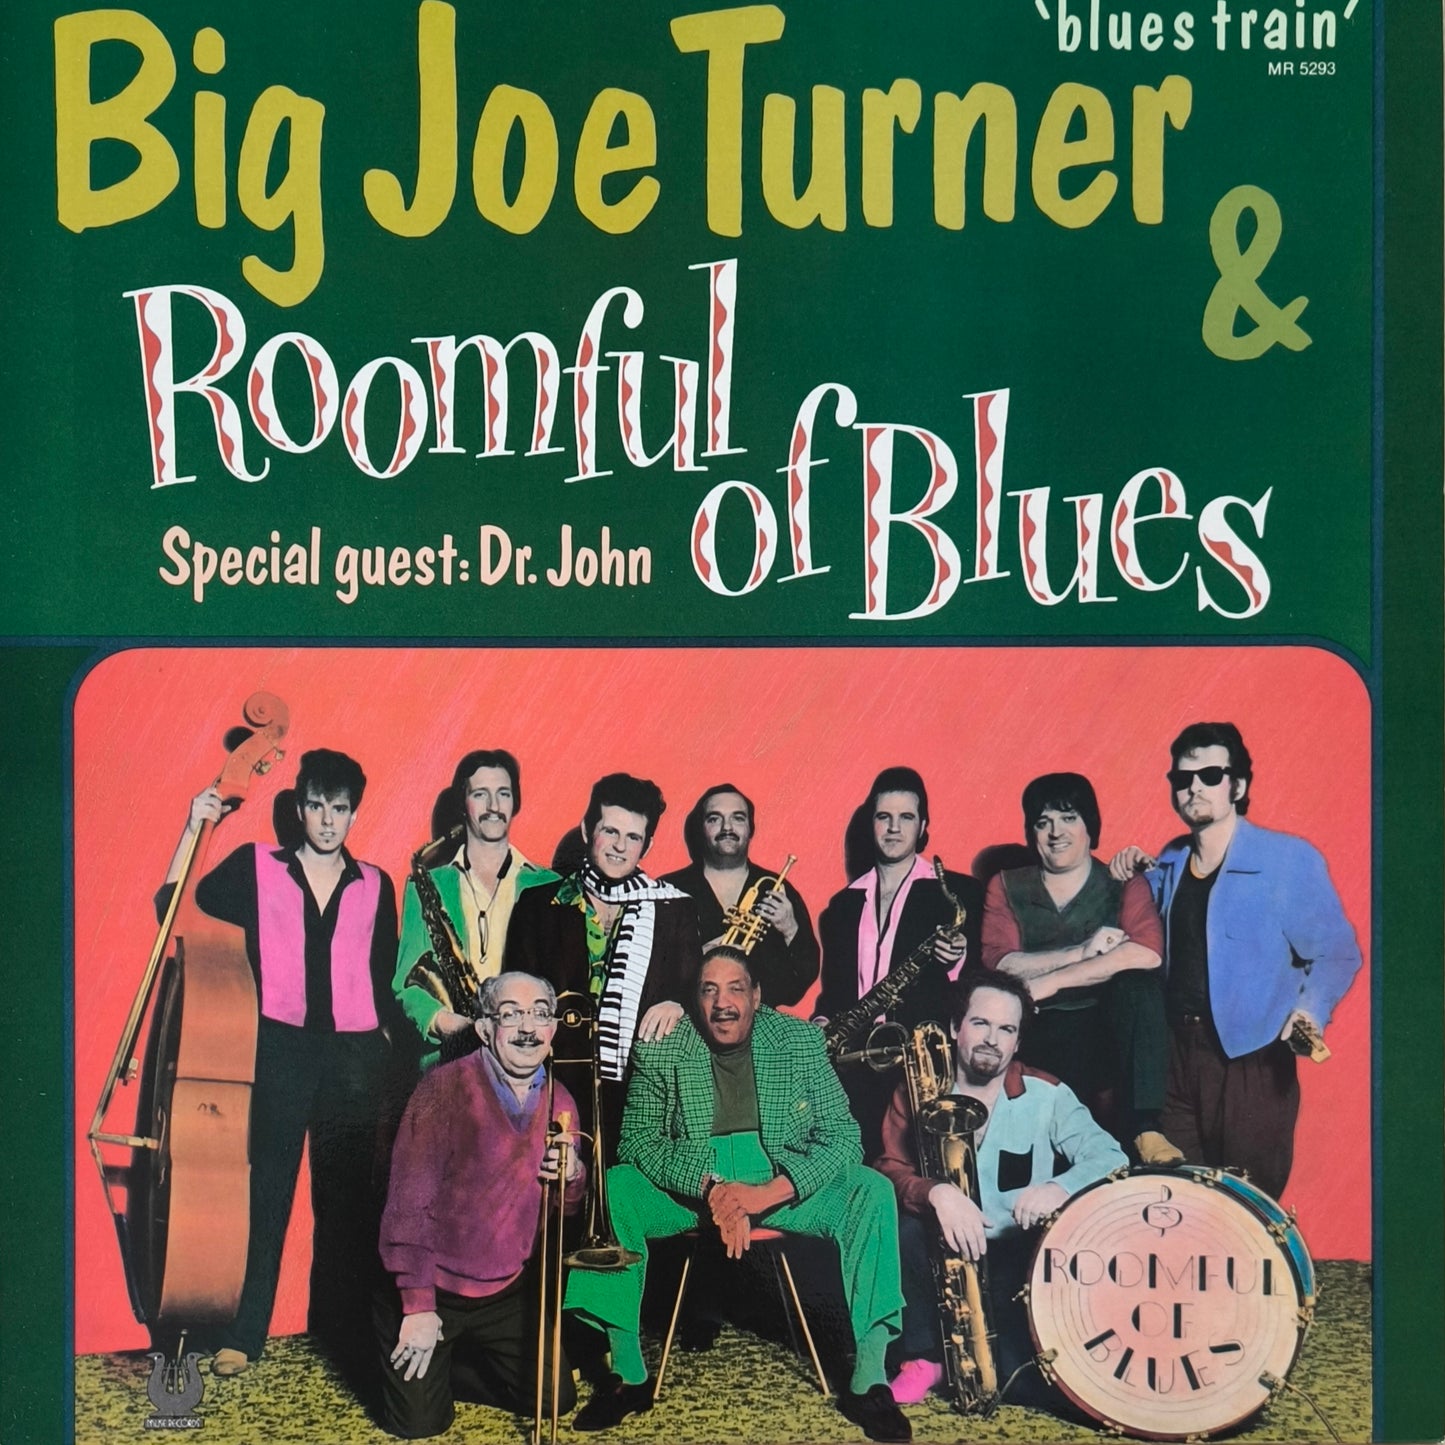 BIG JOE TURNER & ROOMFUL OF BLUES - Blues Train